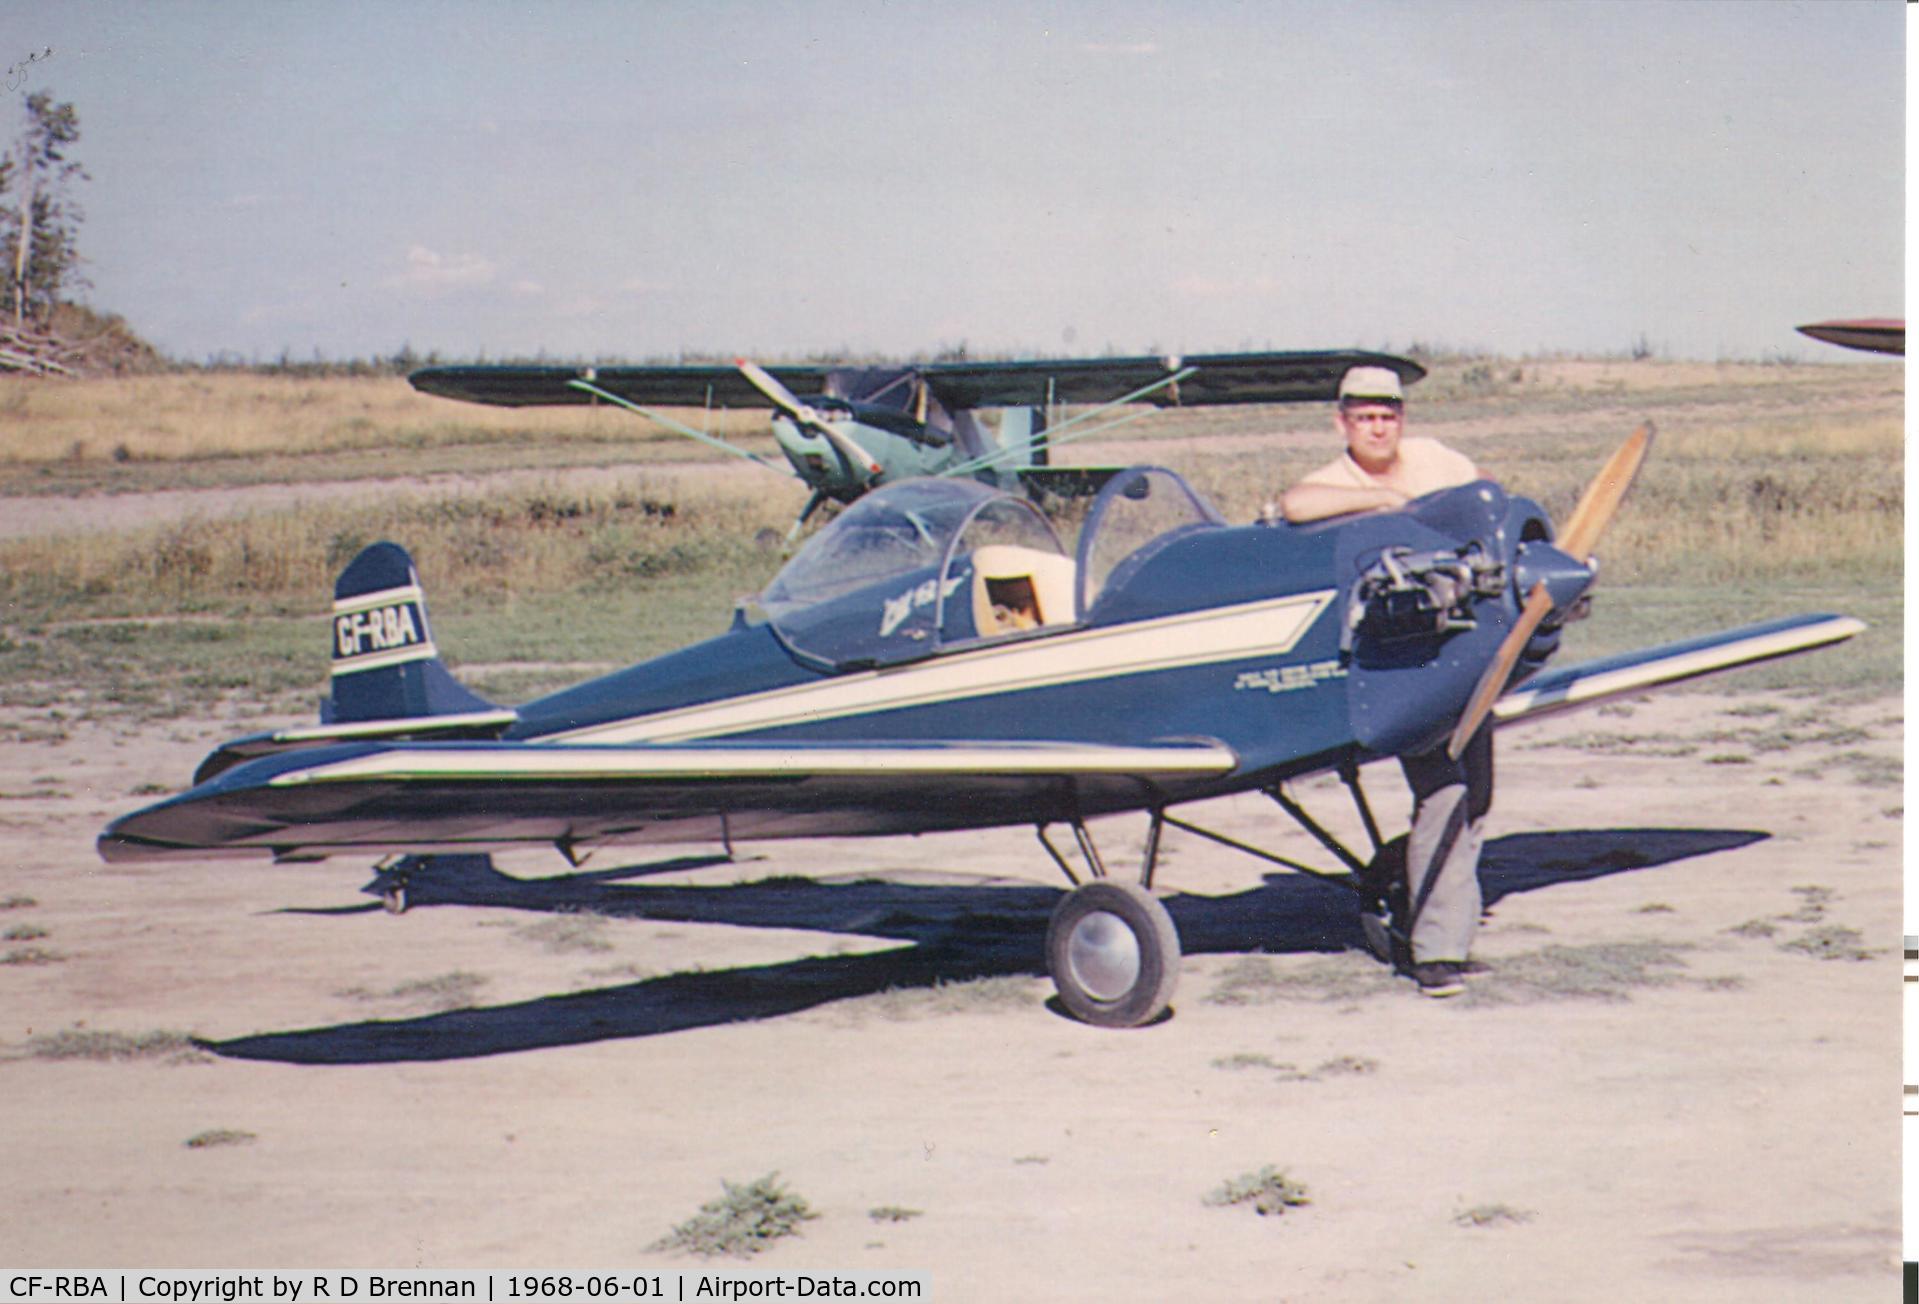 CF-RBA, 1958 R B Brennan Turbulant C/N 1, Turbulent at big lake aerodrome (no longer in existence